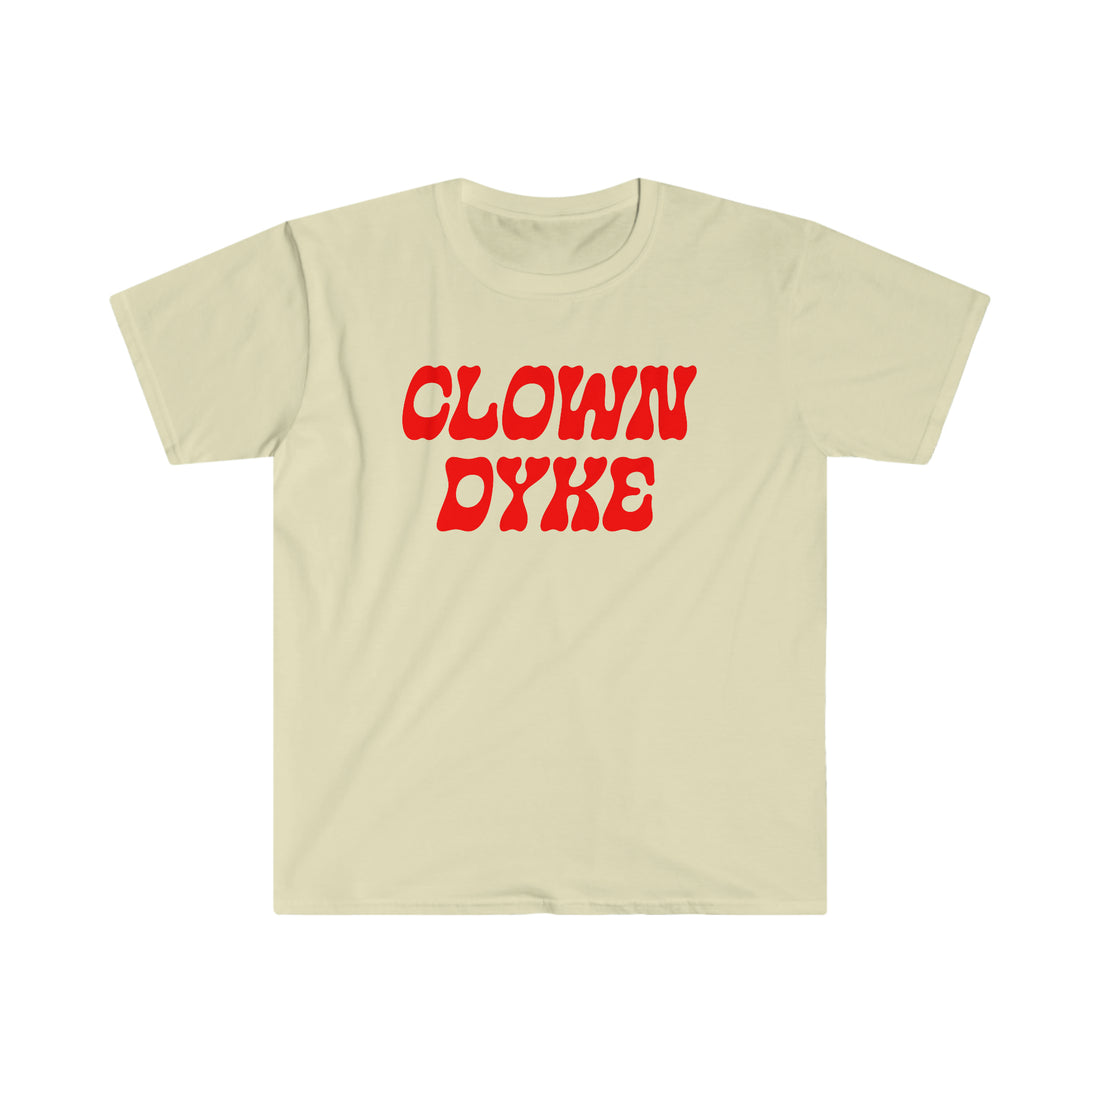 CLOWN DYKE - Unisex Shirt